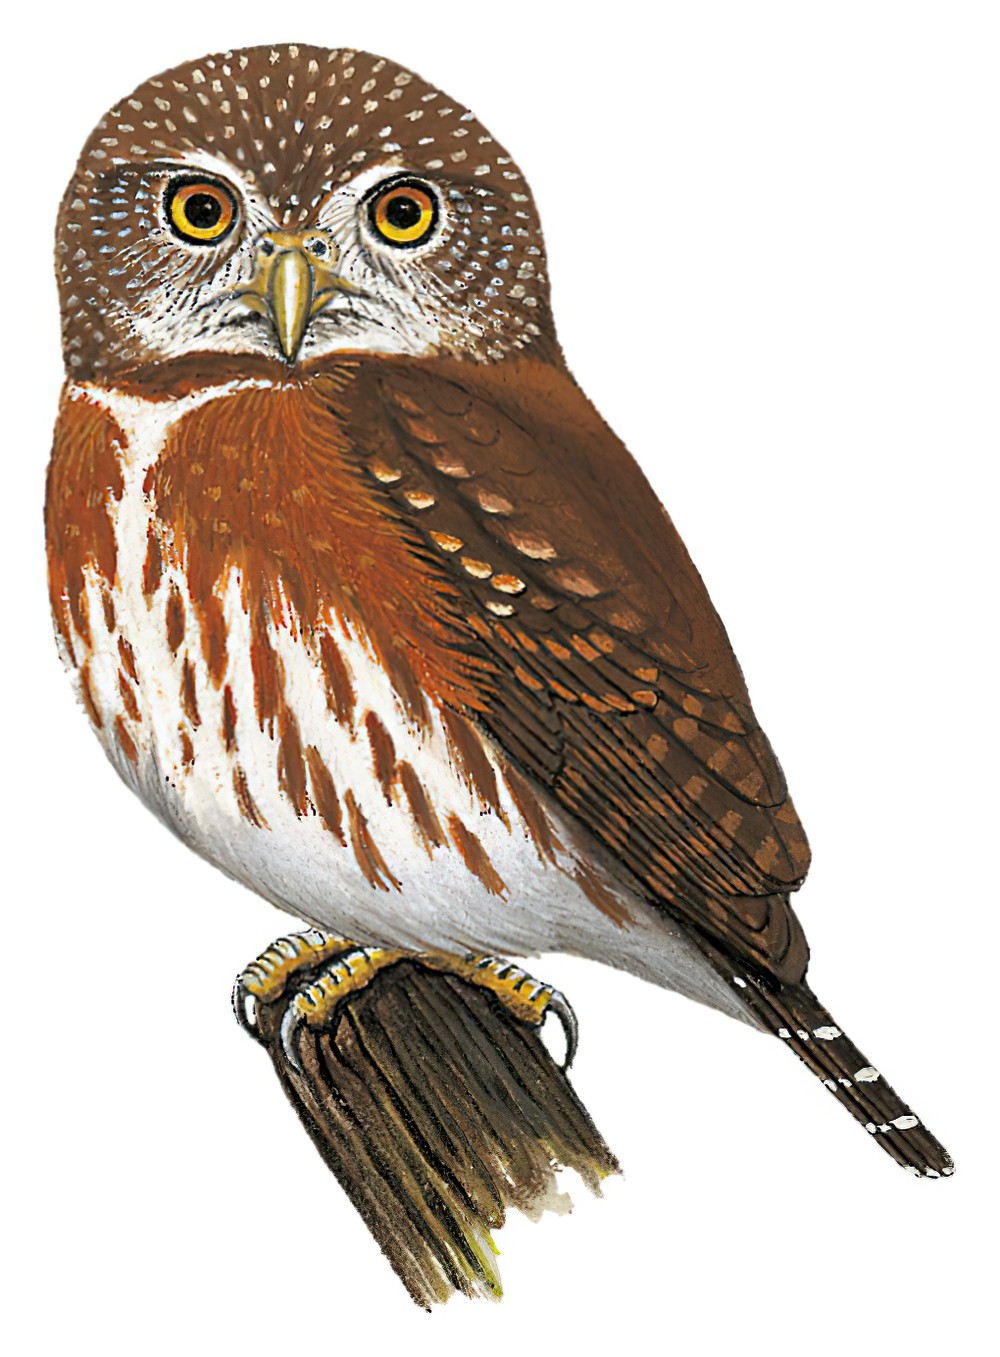 Least Pygmy-Owl / Glaucidium minutissimum